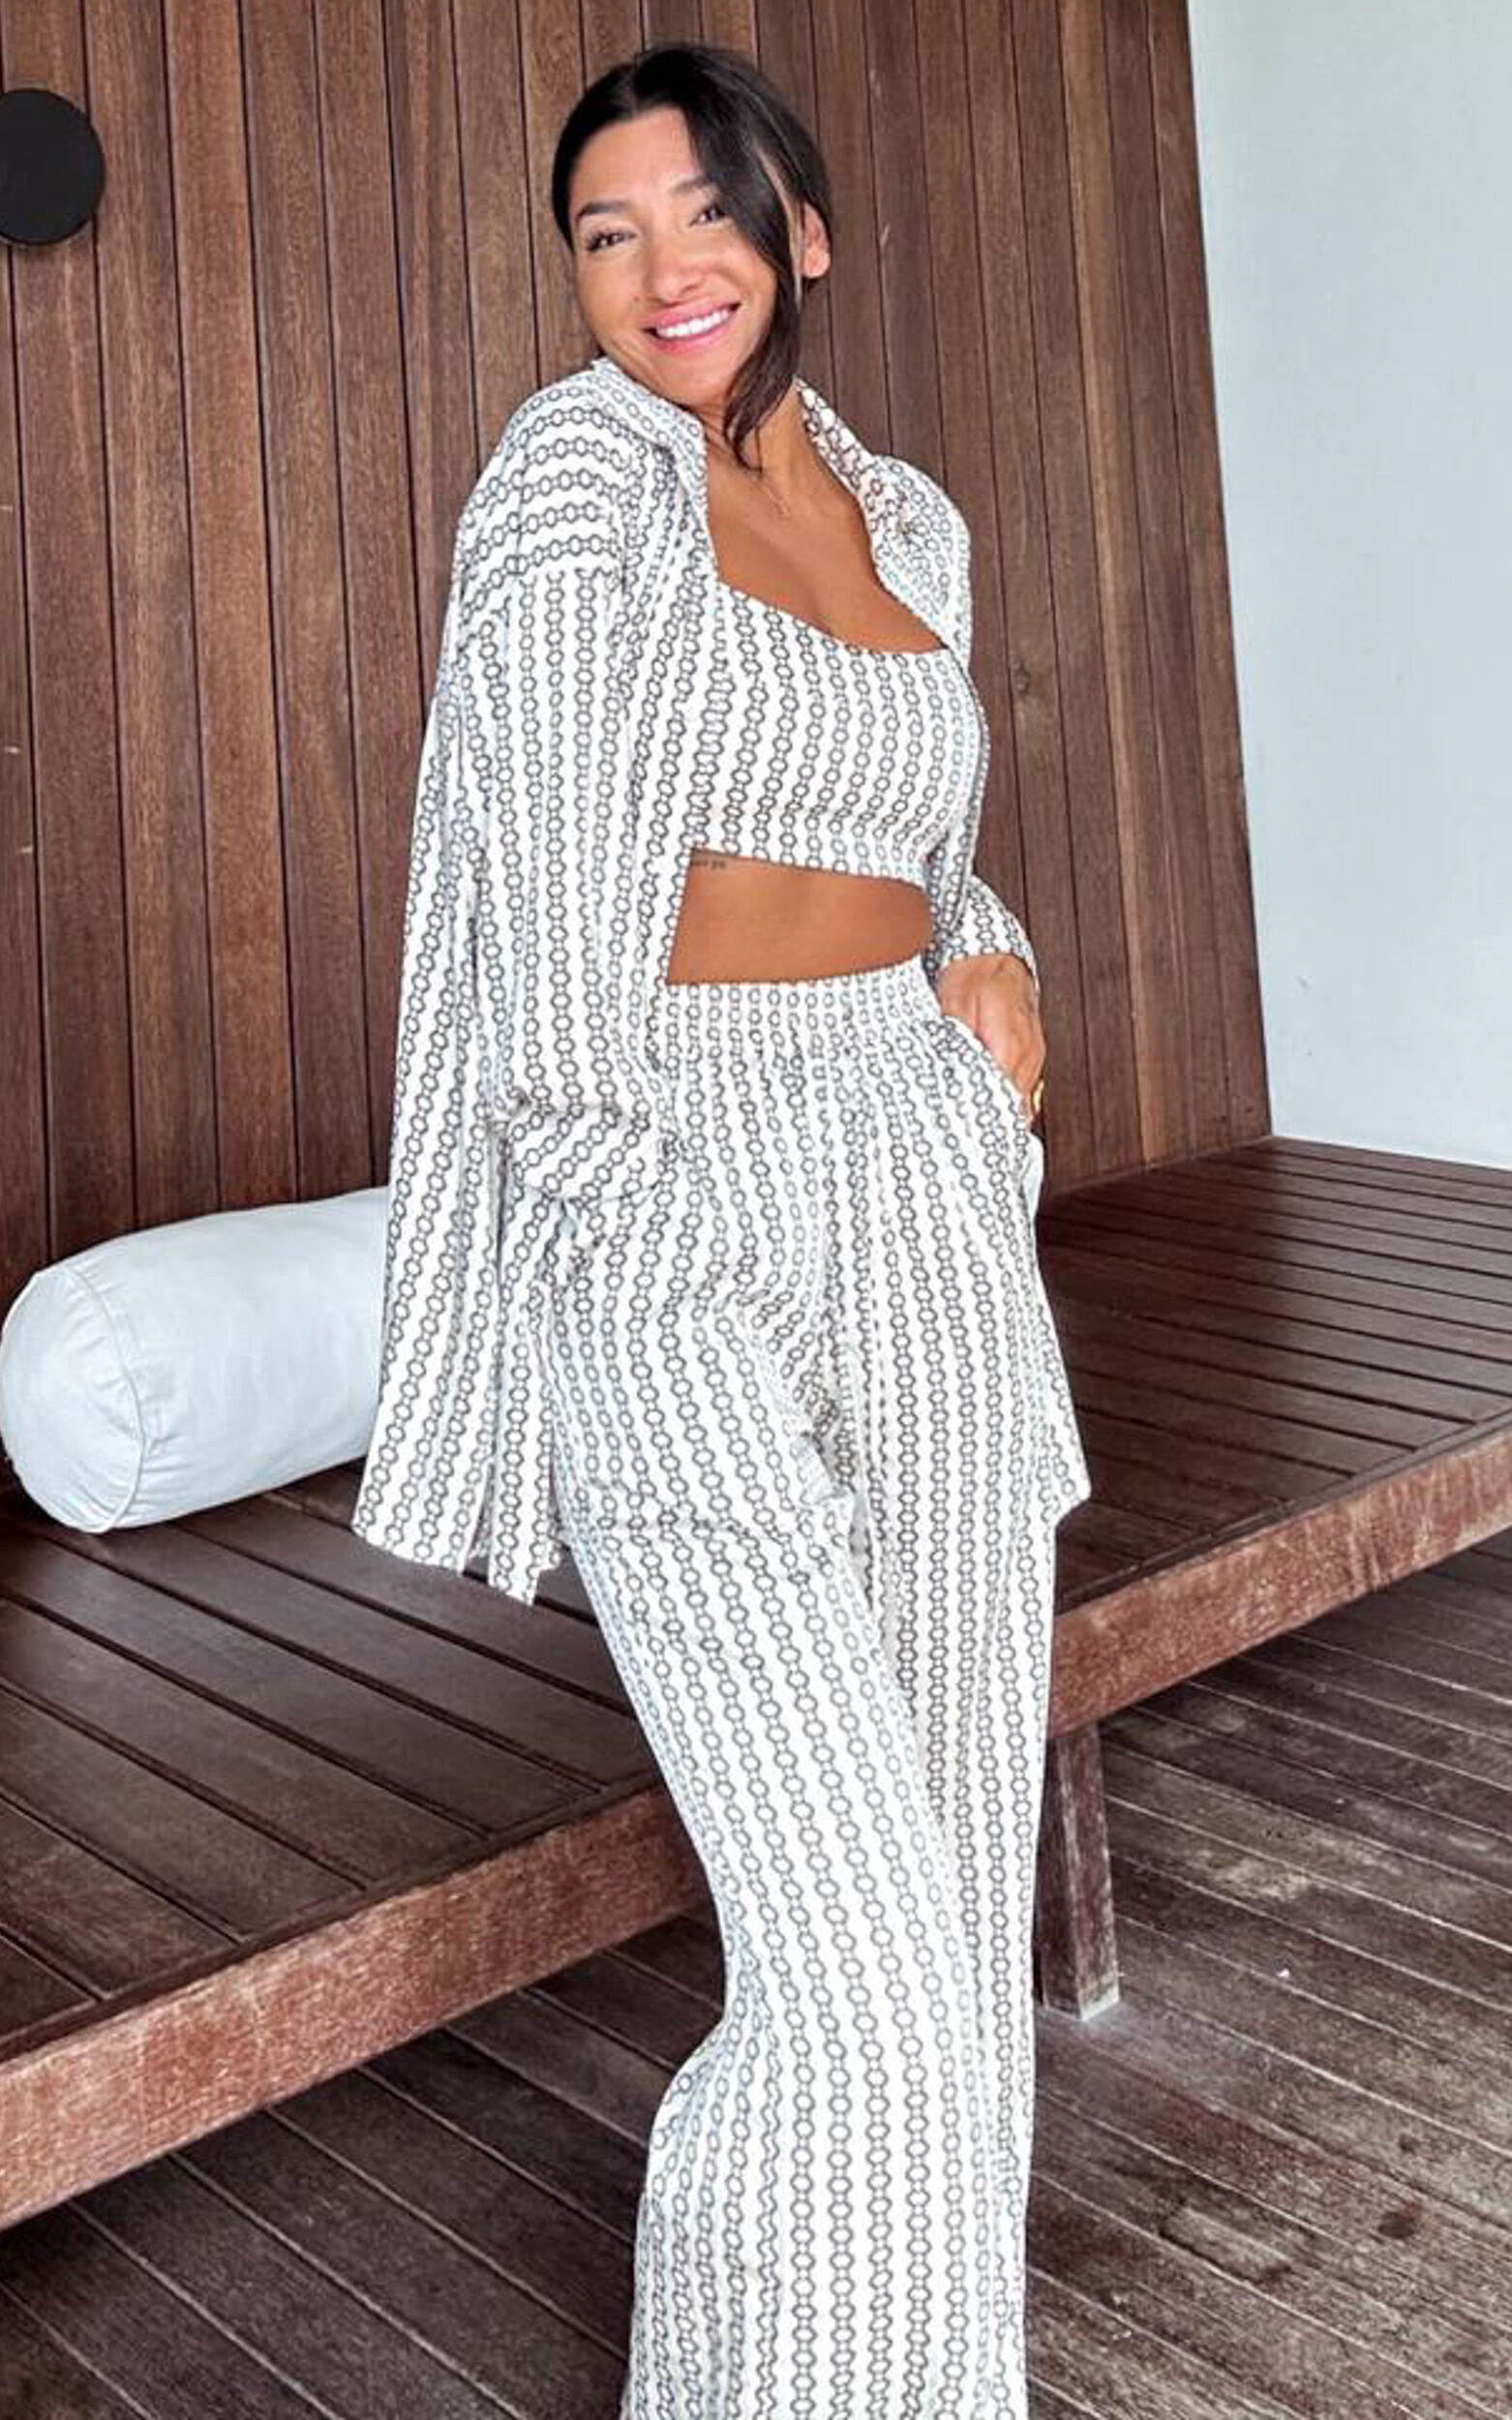 SERIMINO Womens Pajama Sets Sleepwear Lounge Sets Long Sleeve with Long Pants 